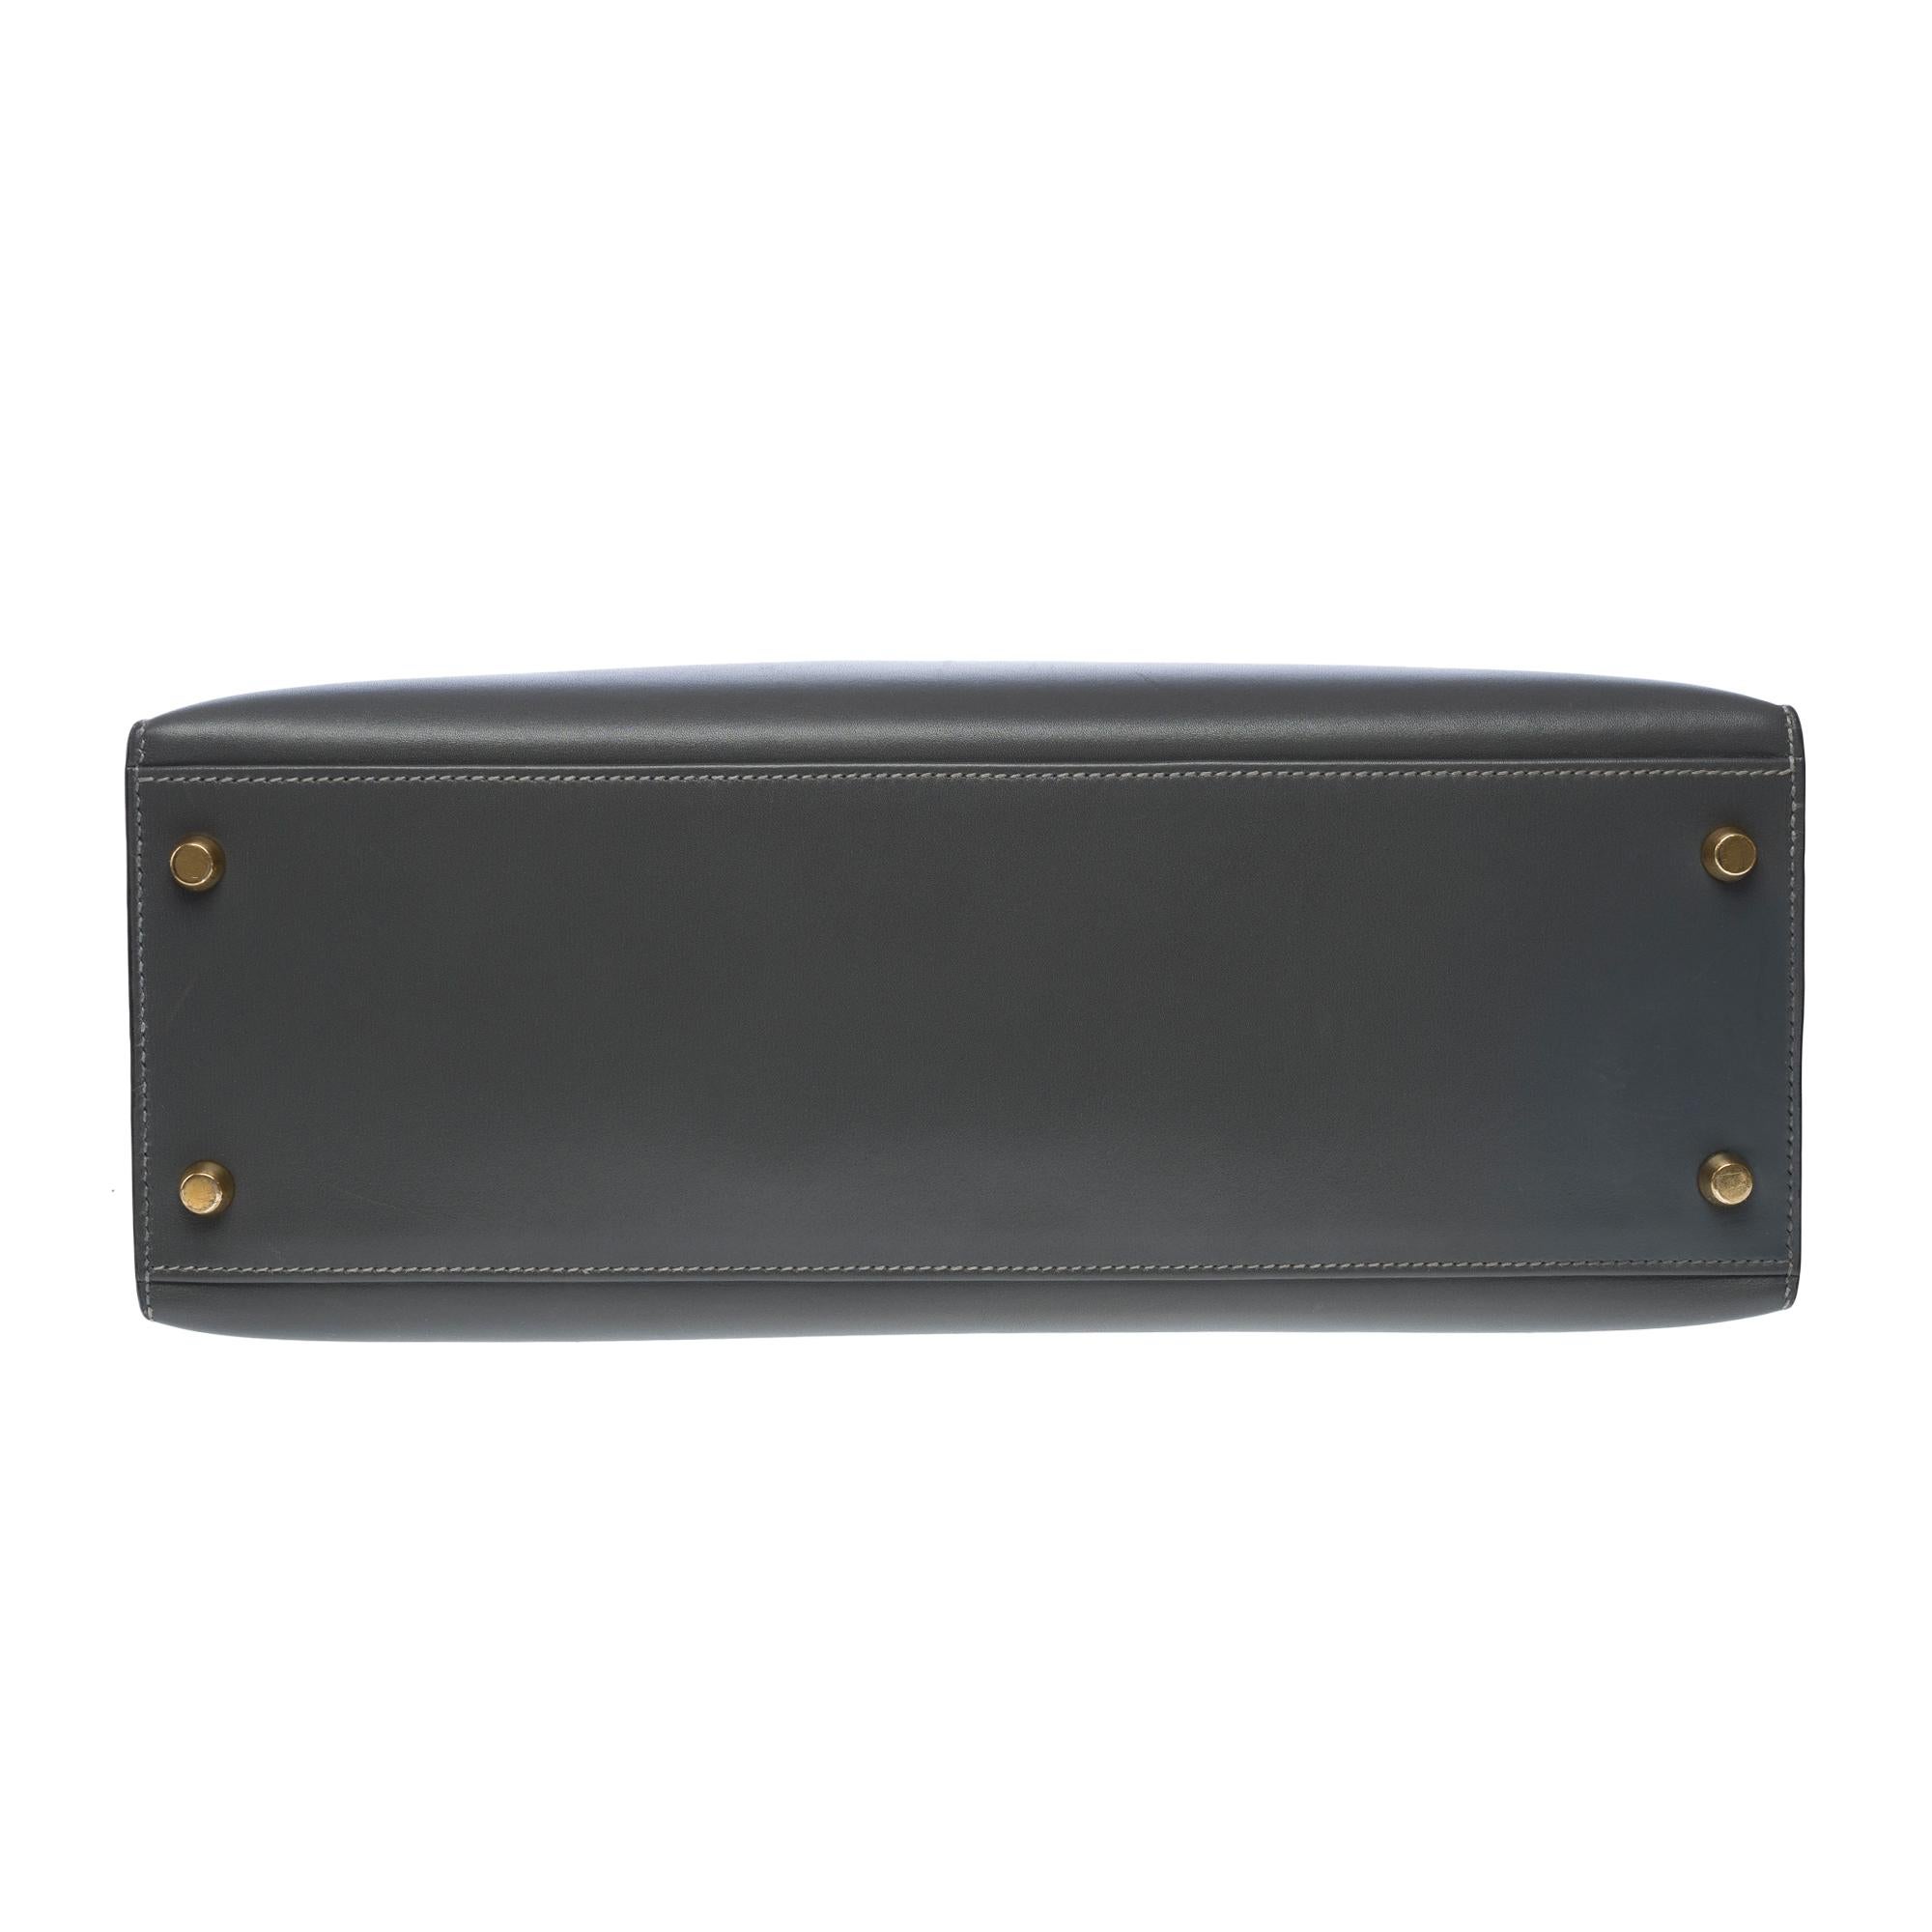 Rare Hermès Kelly 32 sellier handbag strap in Navy & Black calfskin leather, GHW 6